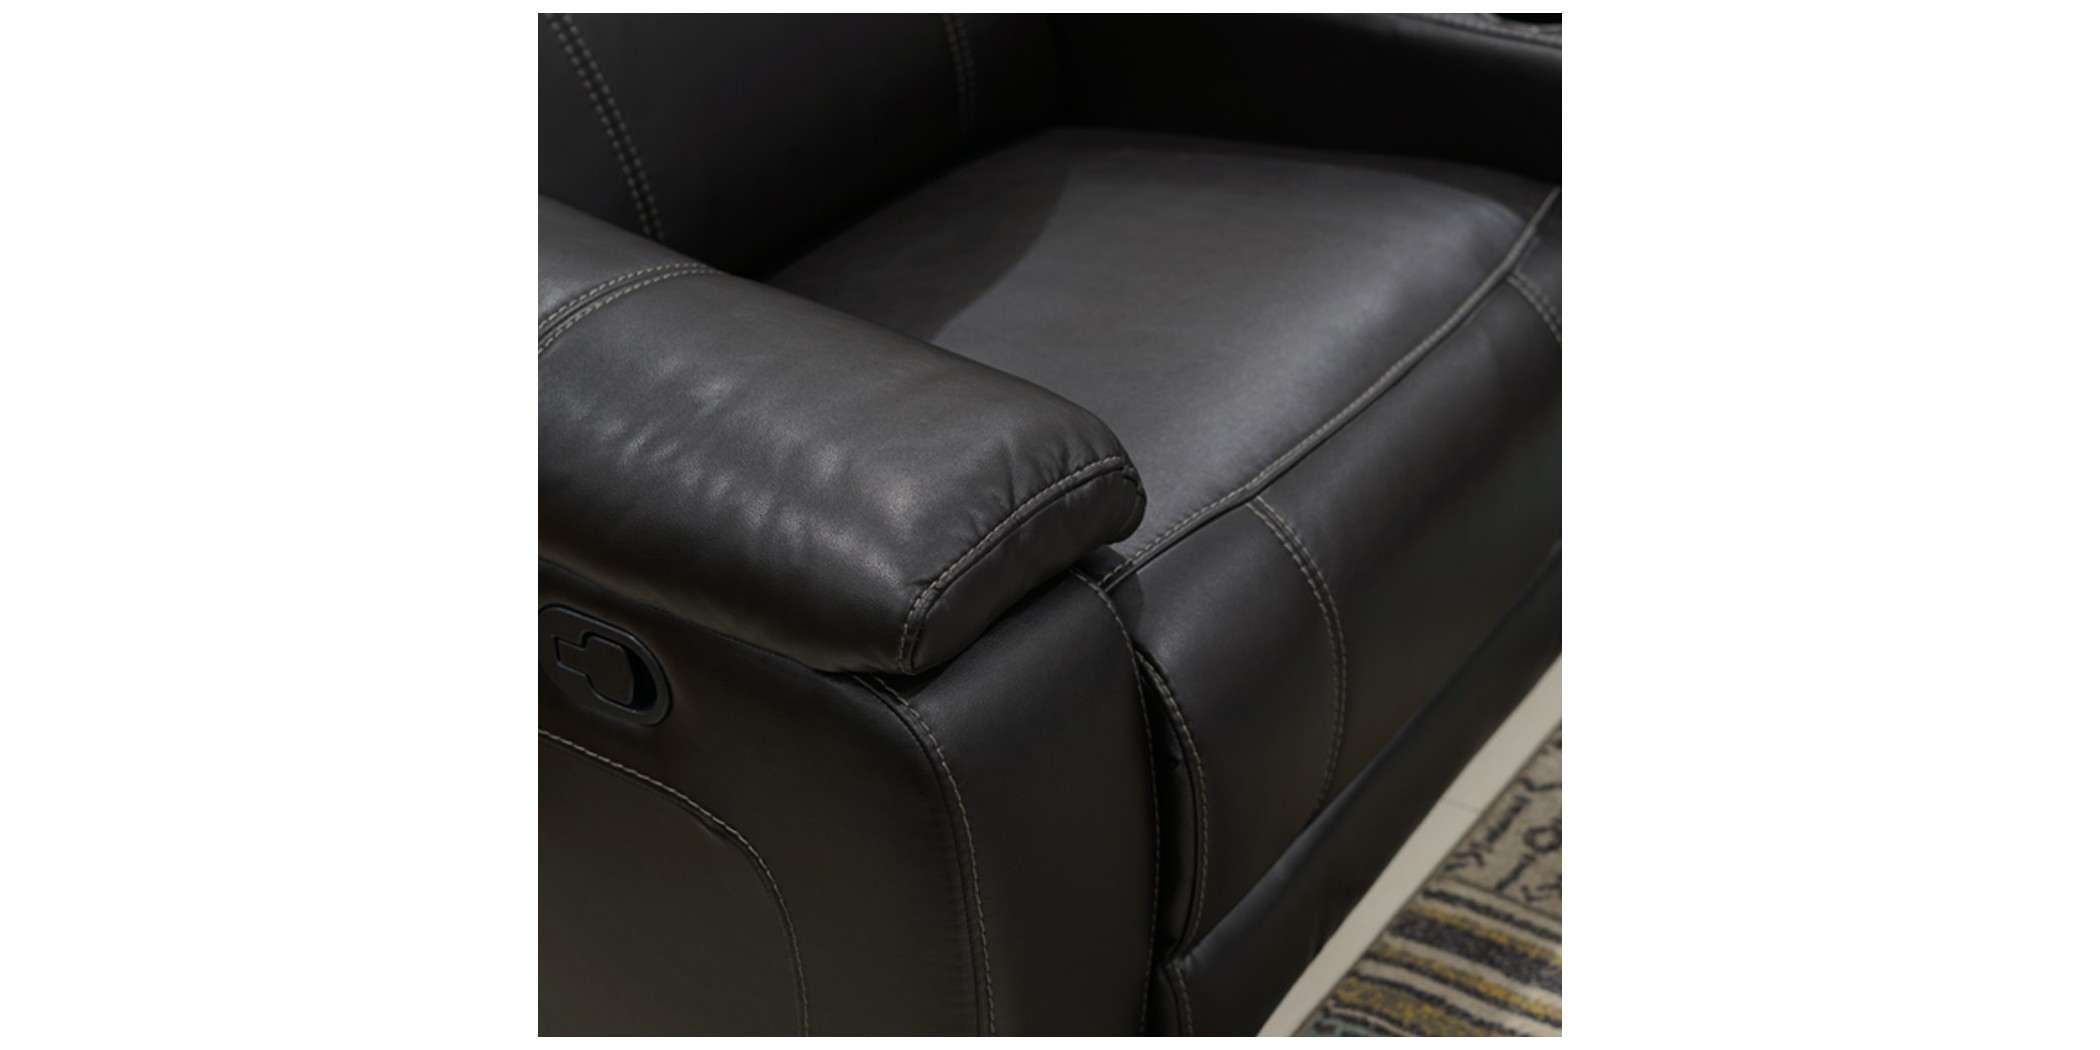 Laney Sofa Corner Brown Leather Gel